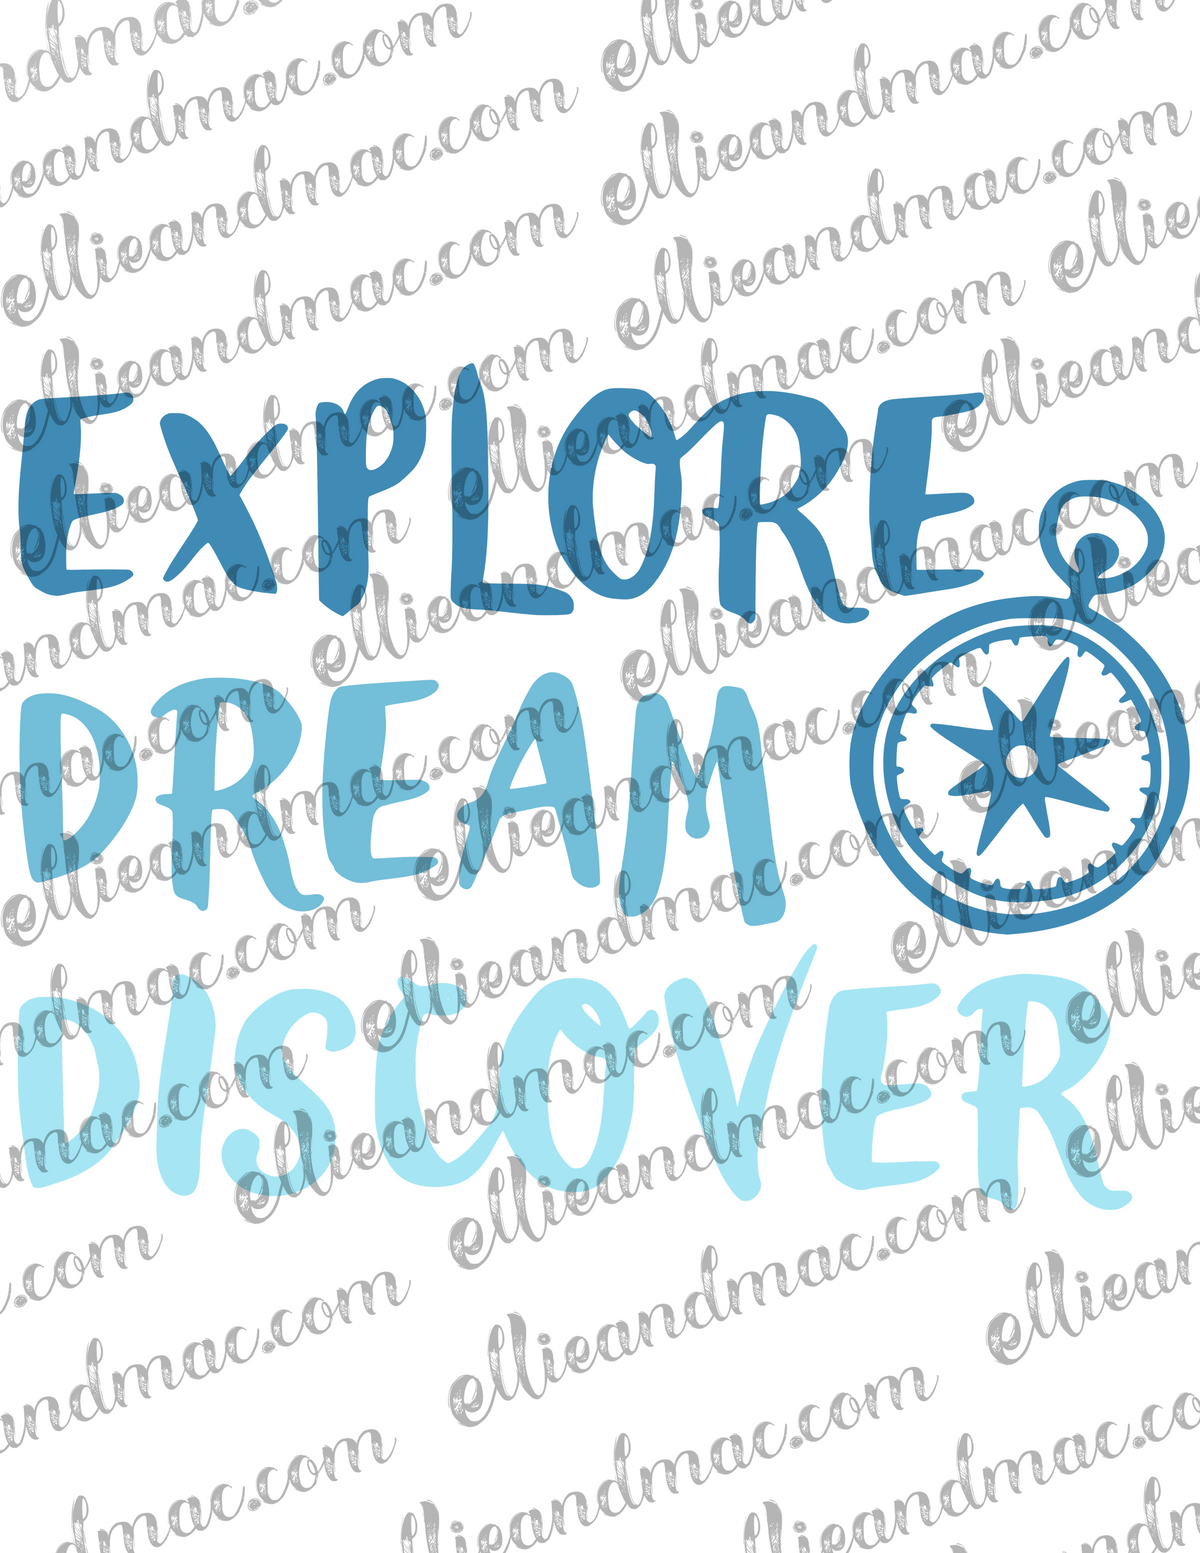 Explore Dream Discover SVG Cutting File